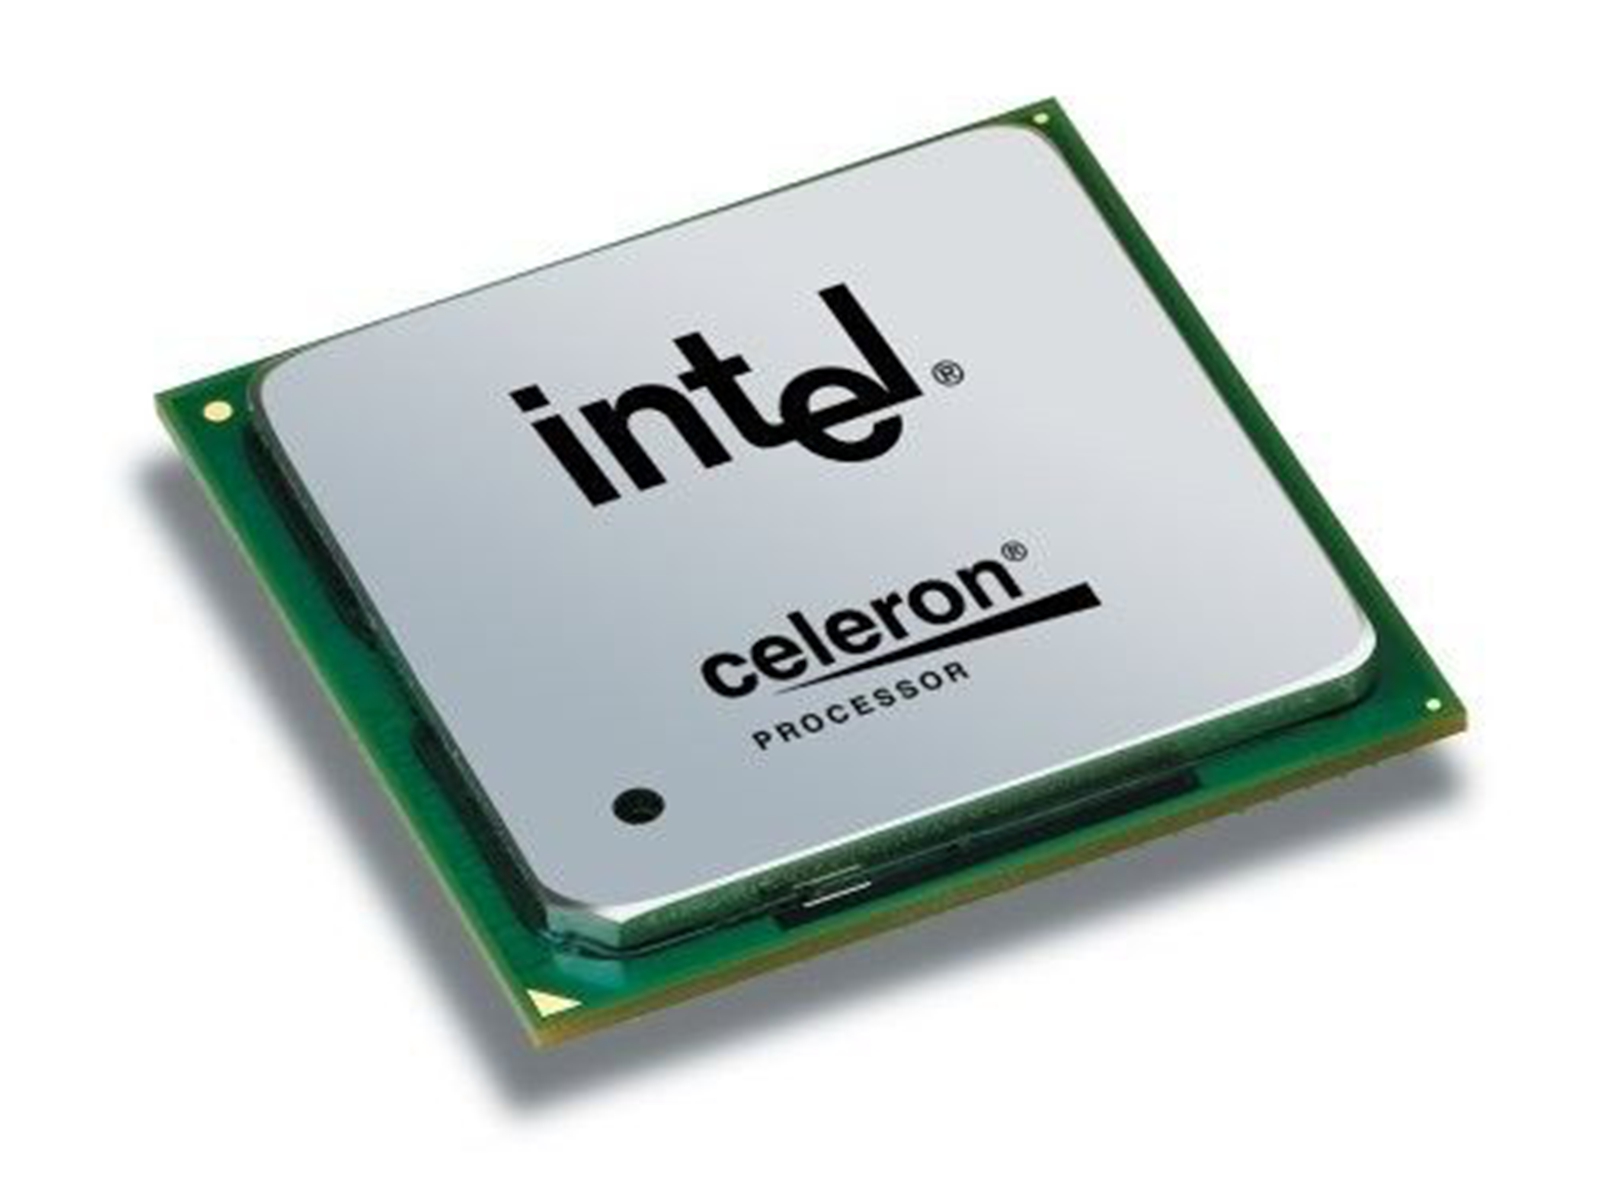 Intel Celeron 478 cpu